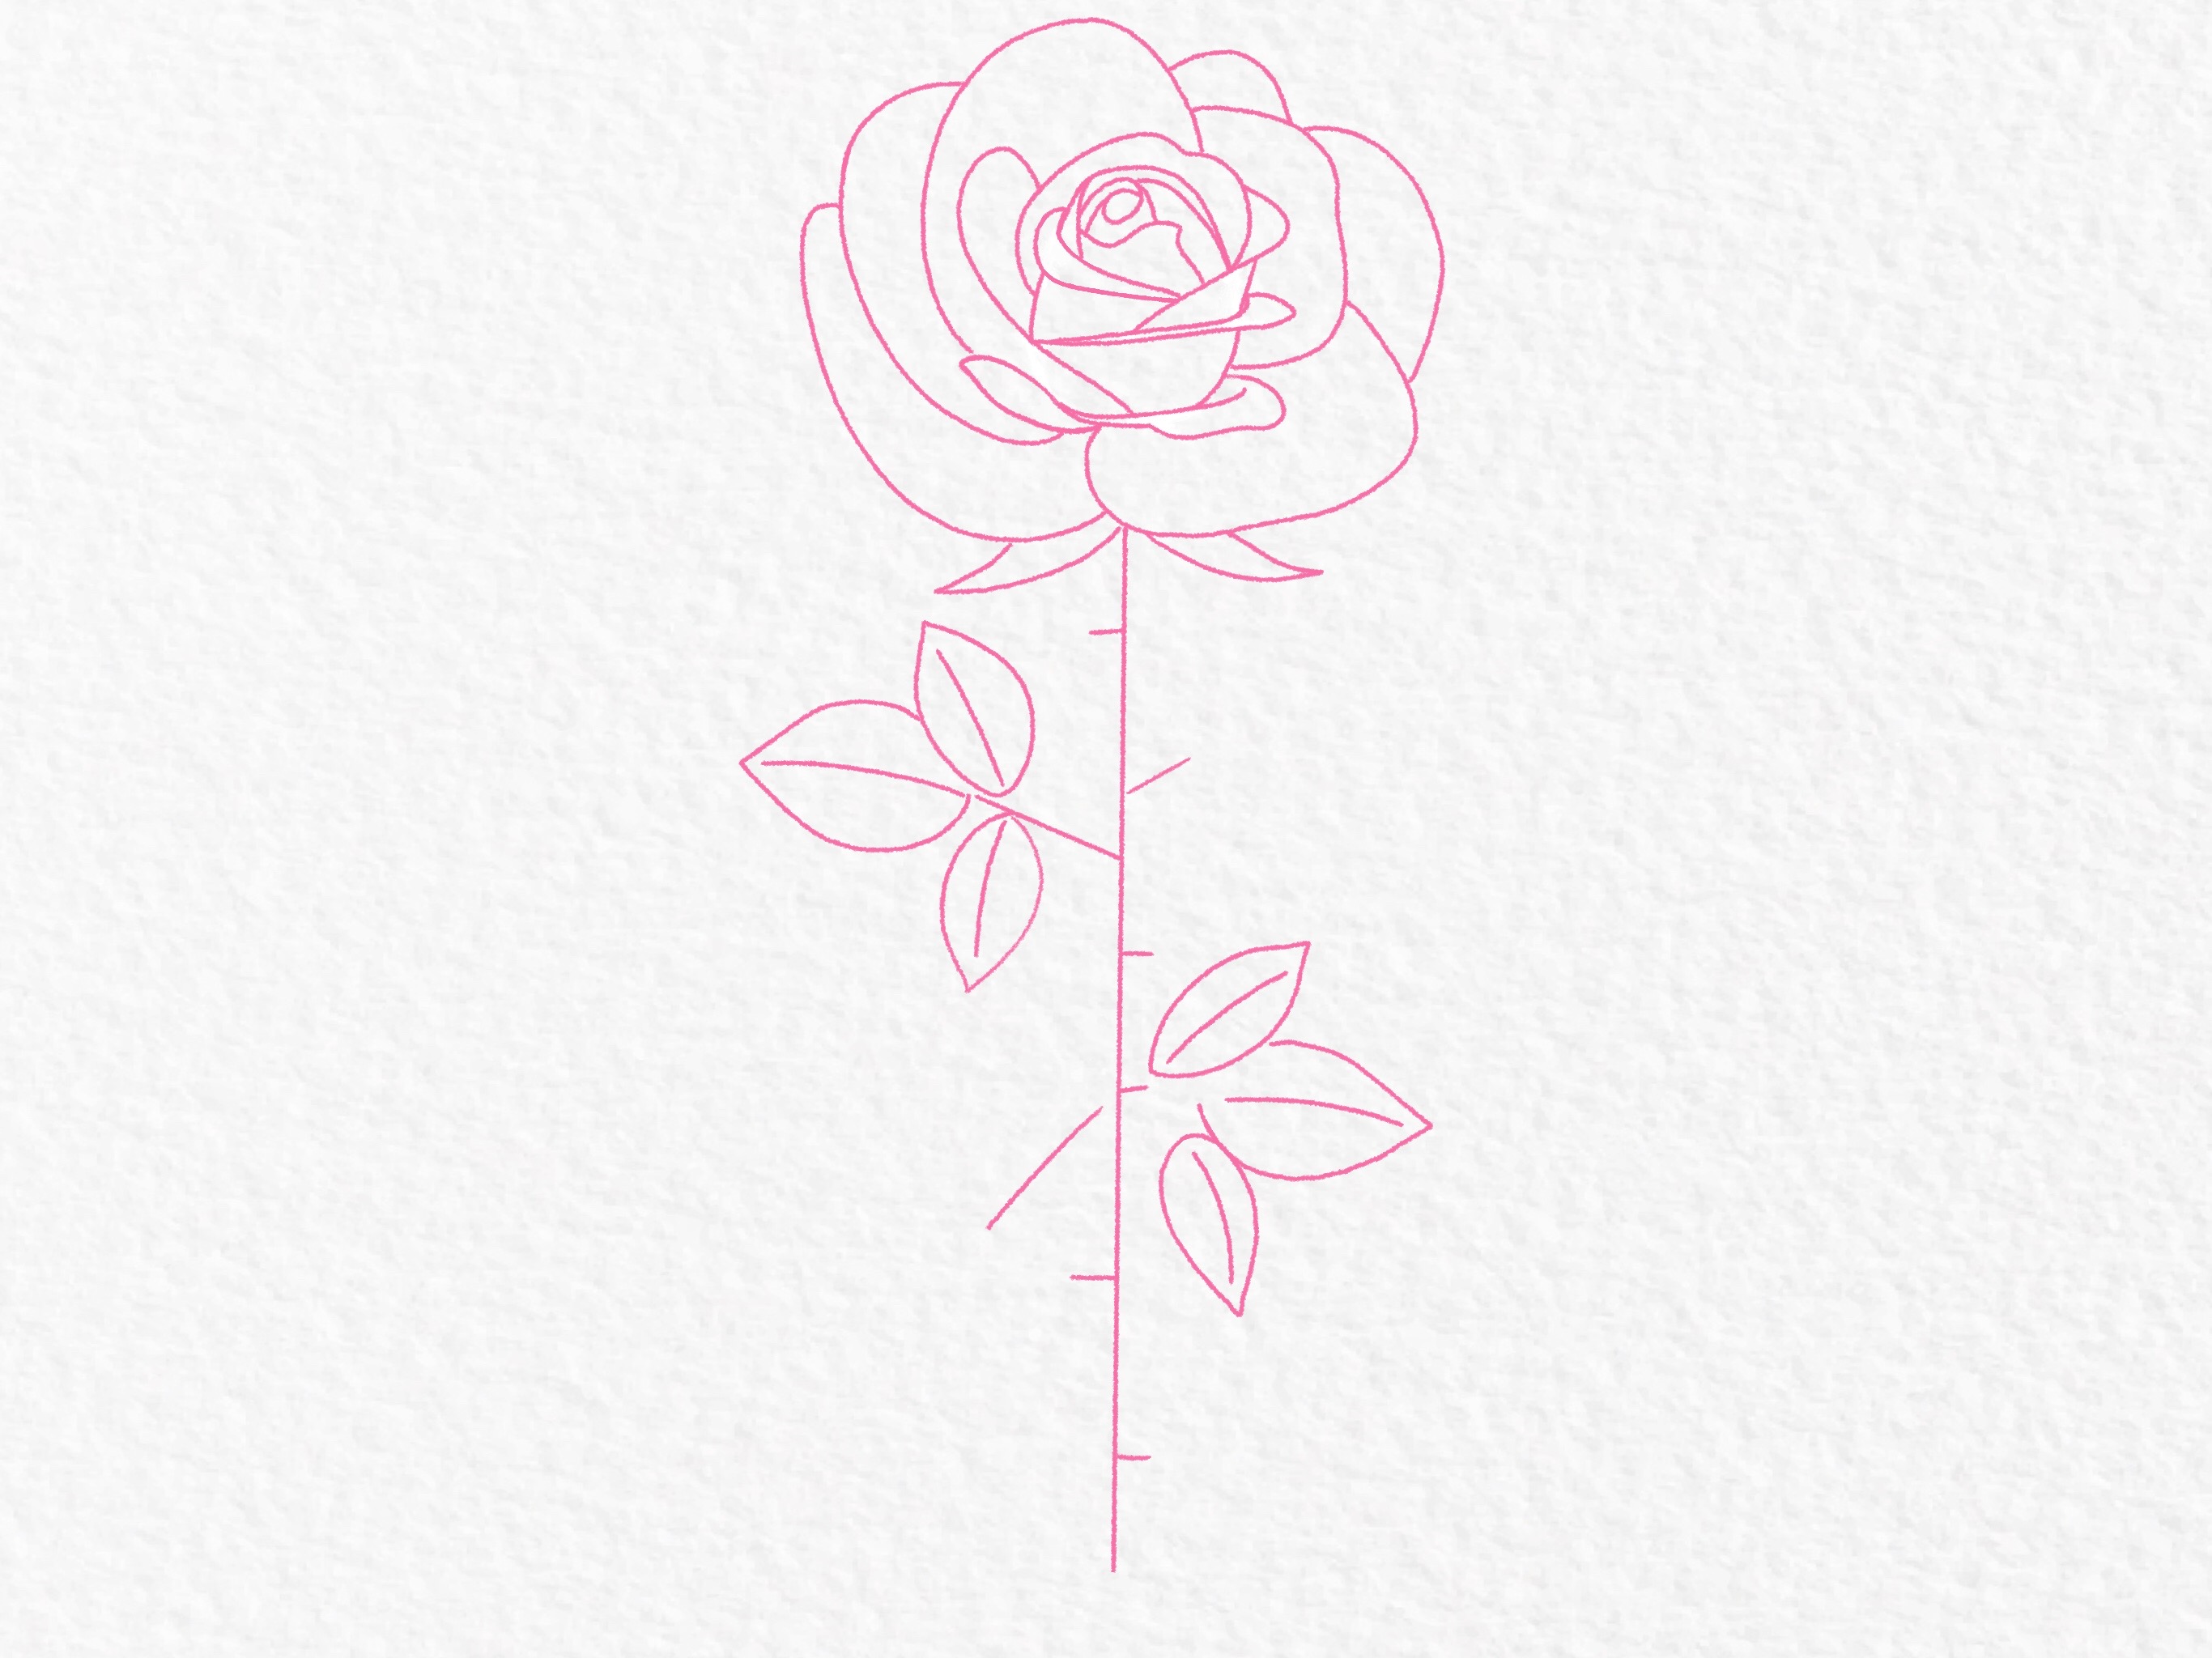 How to draw flowers step-by-step | Adobe